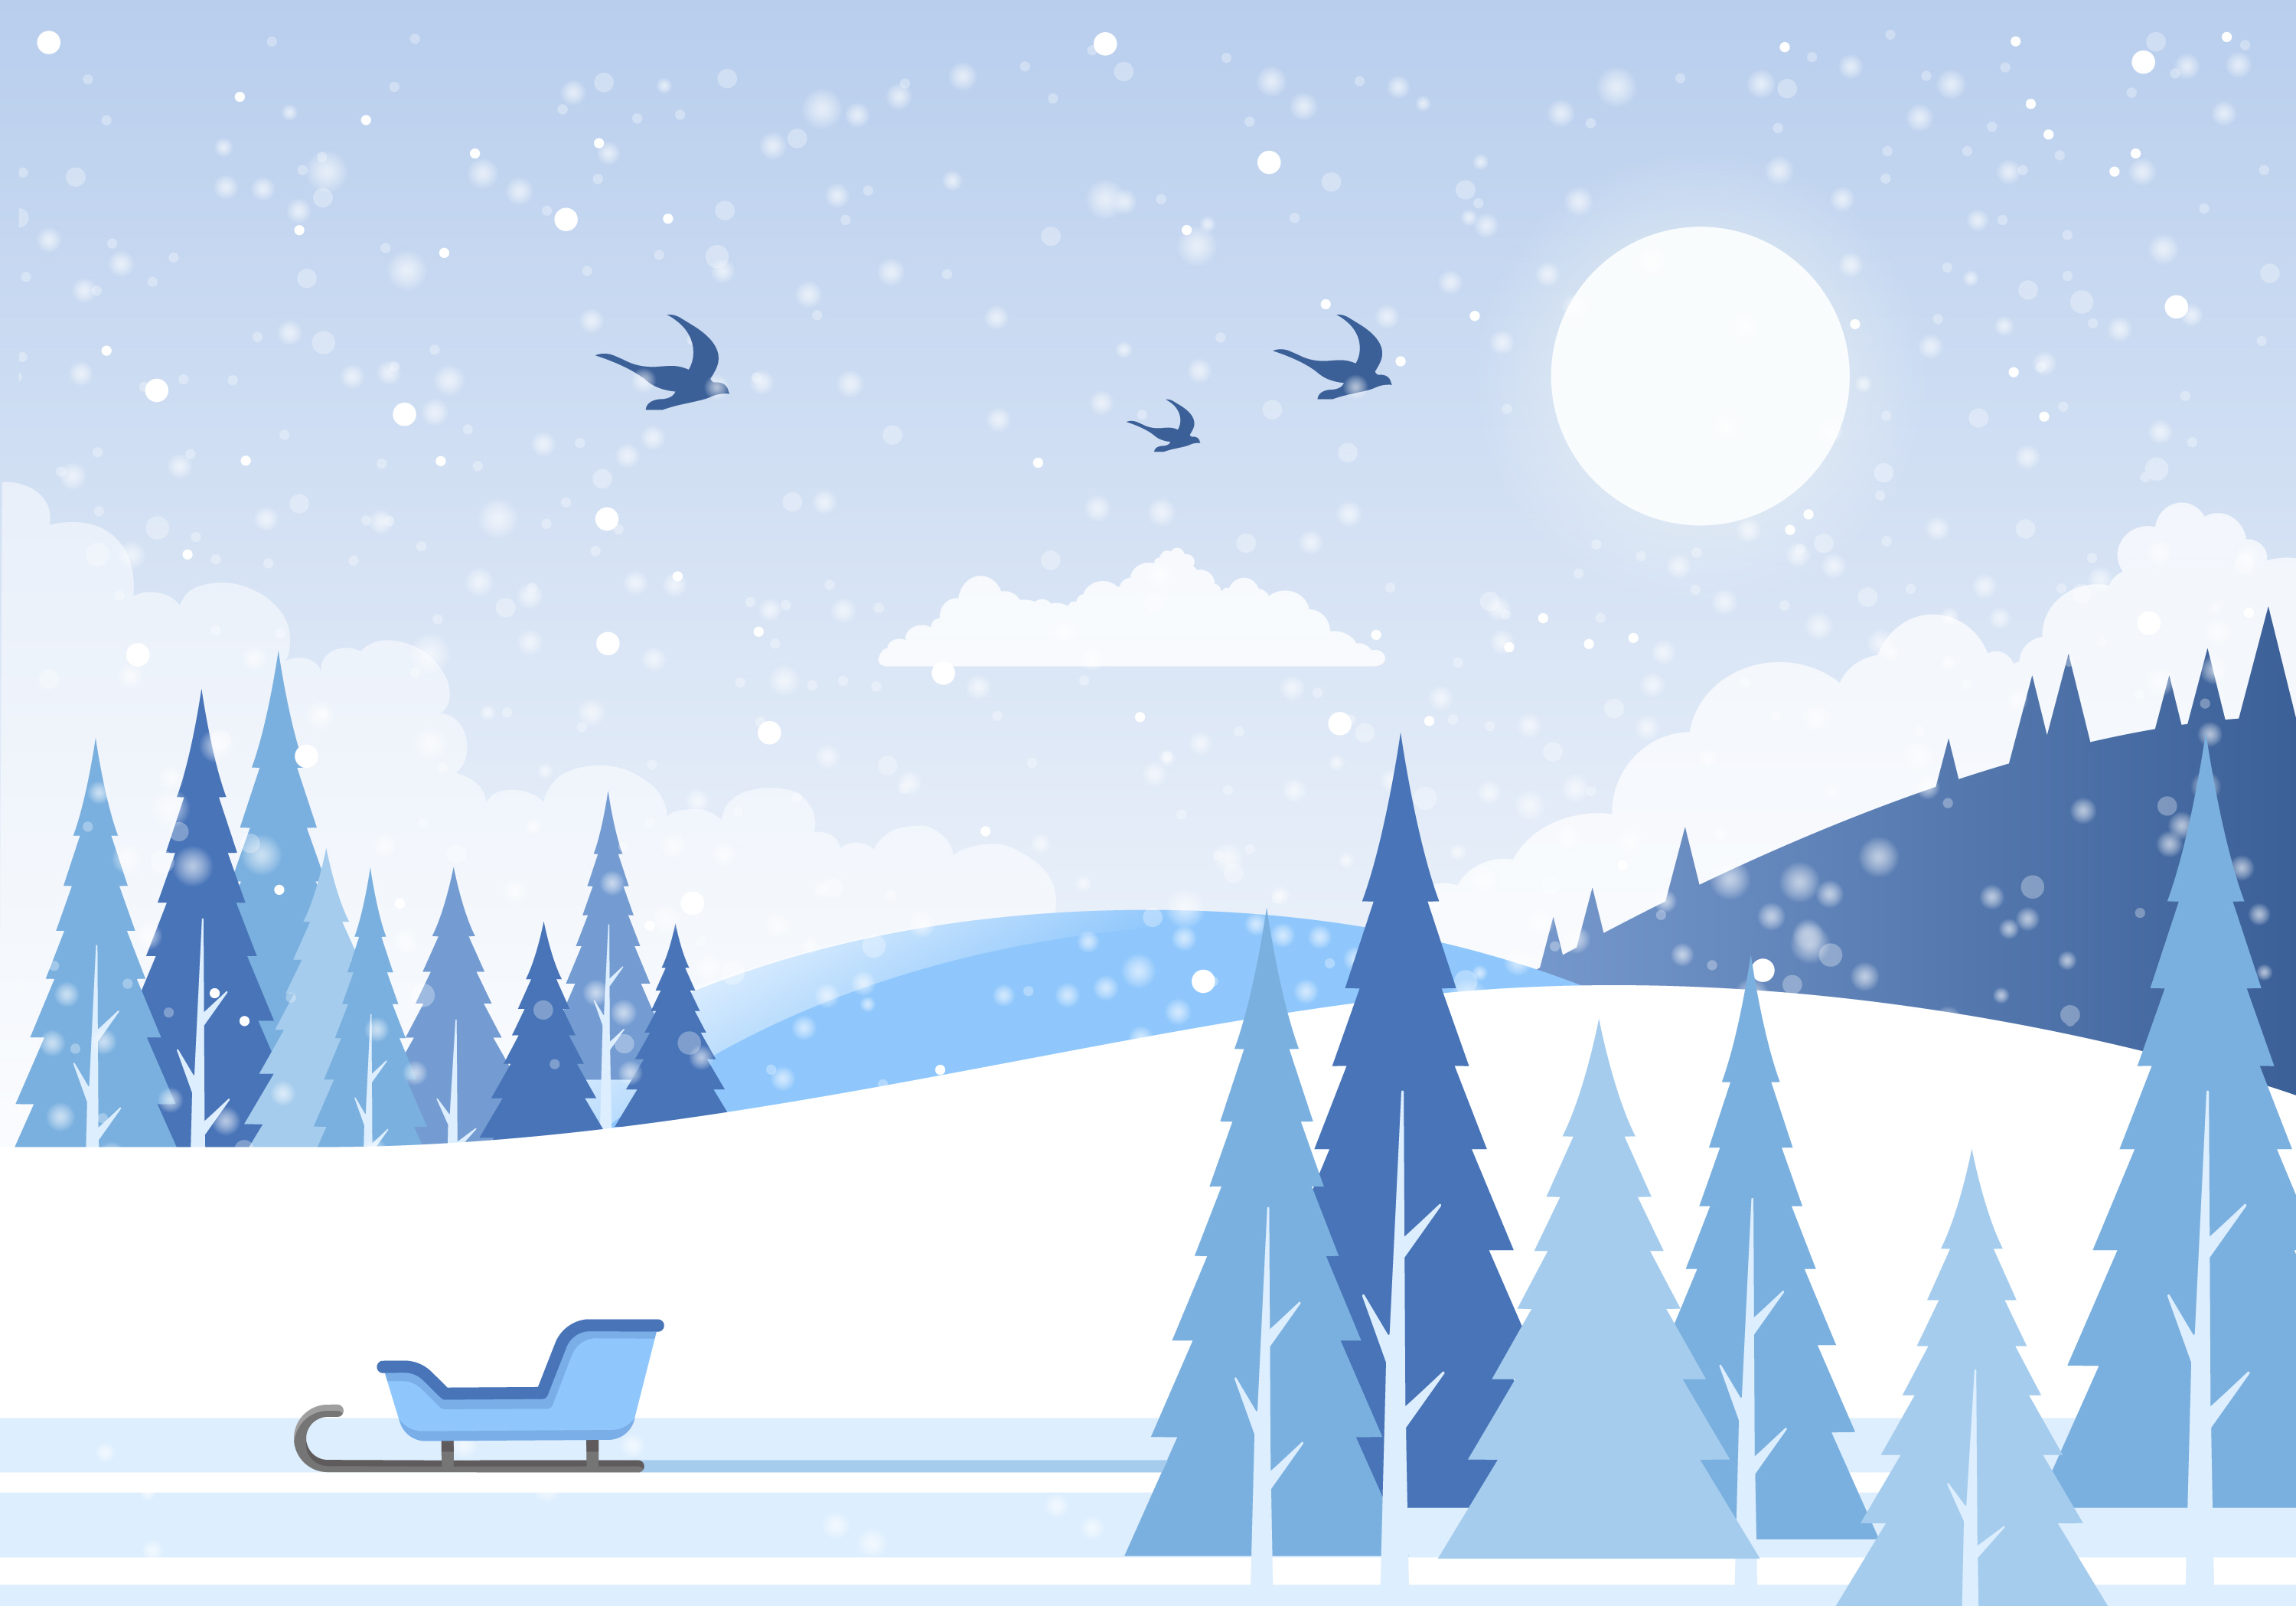 Vector Winter Landscape illustration 265578 Download Free Vectors, Clipart Graphics & Vector Art